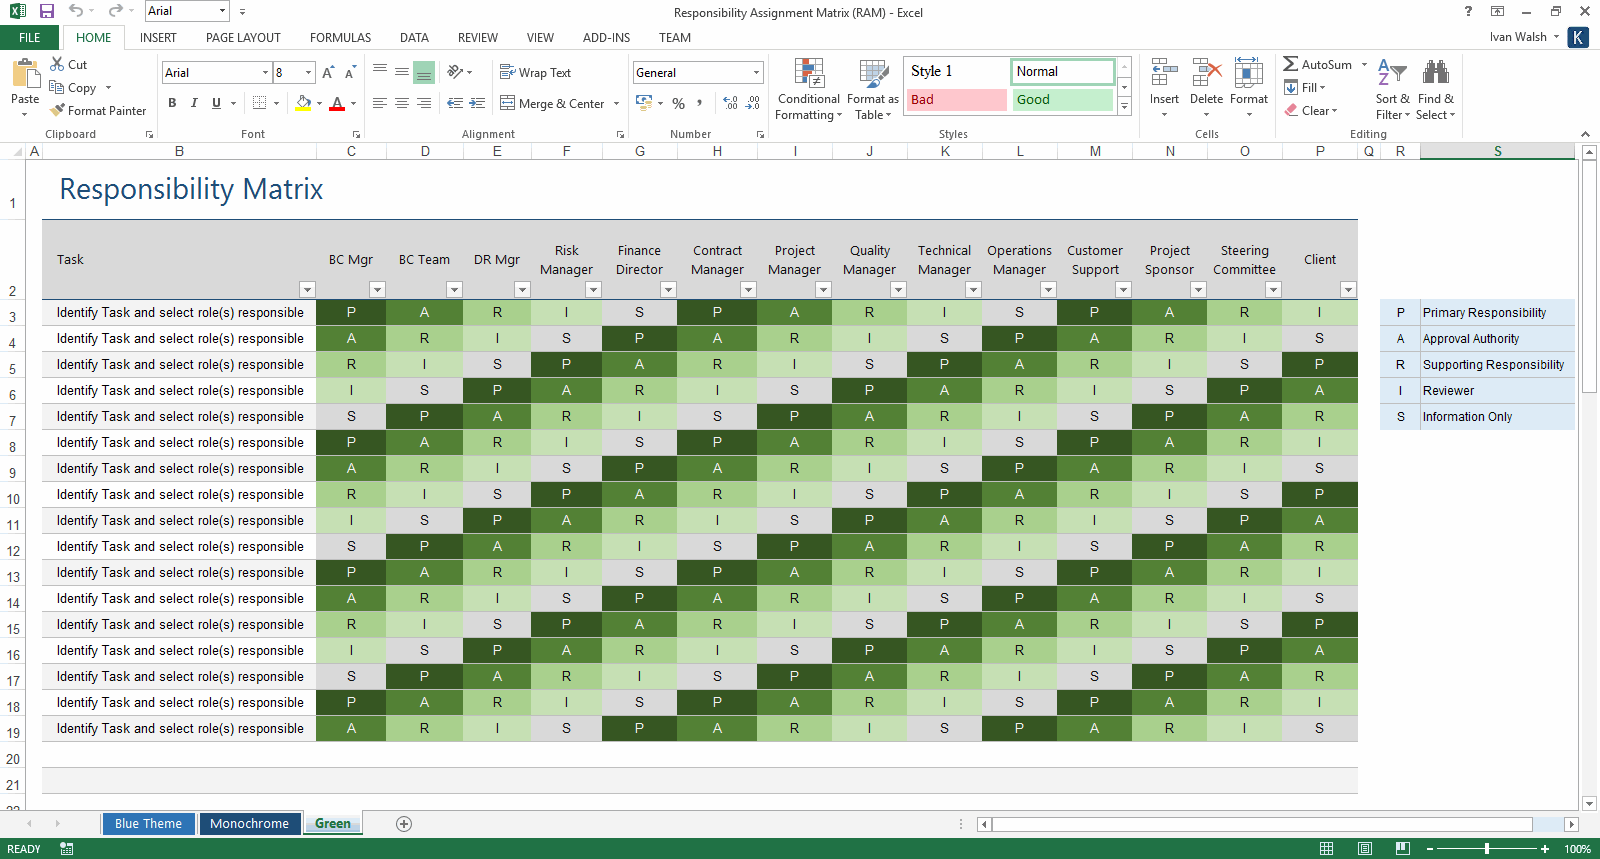 Sod Matrix Template Excel - Segregation Of Duties Matrix Sample Xls Document